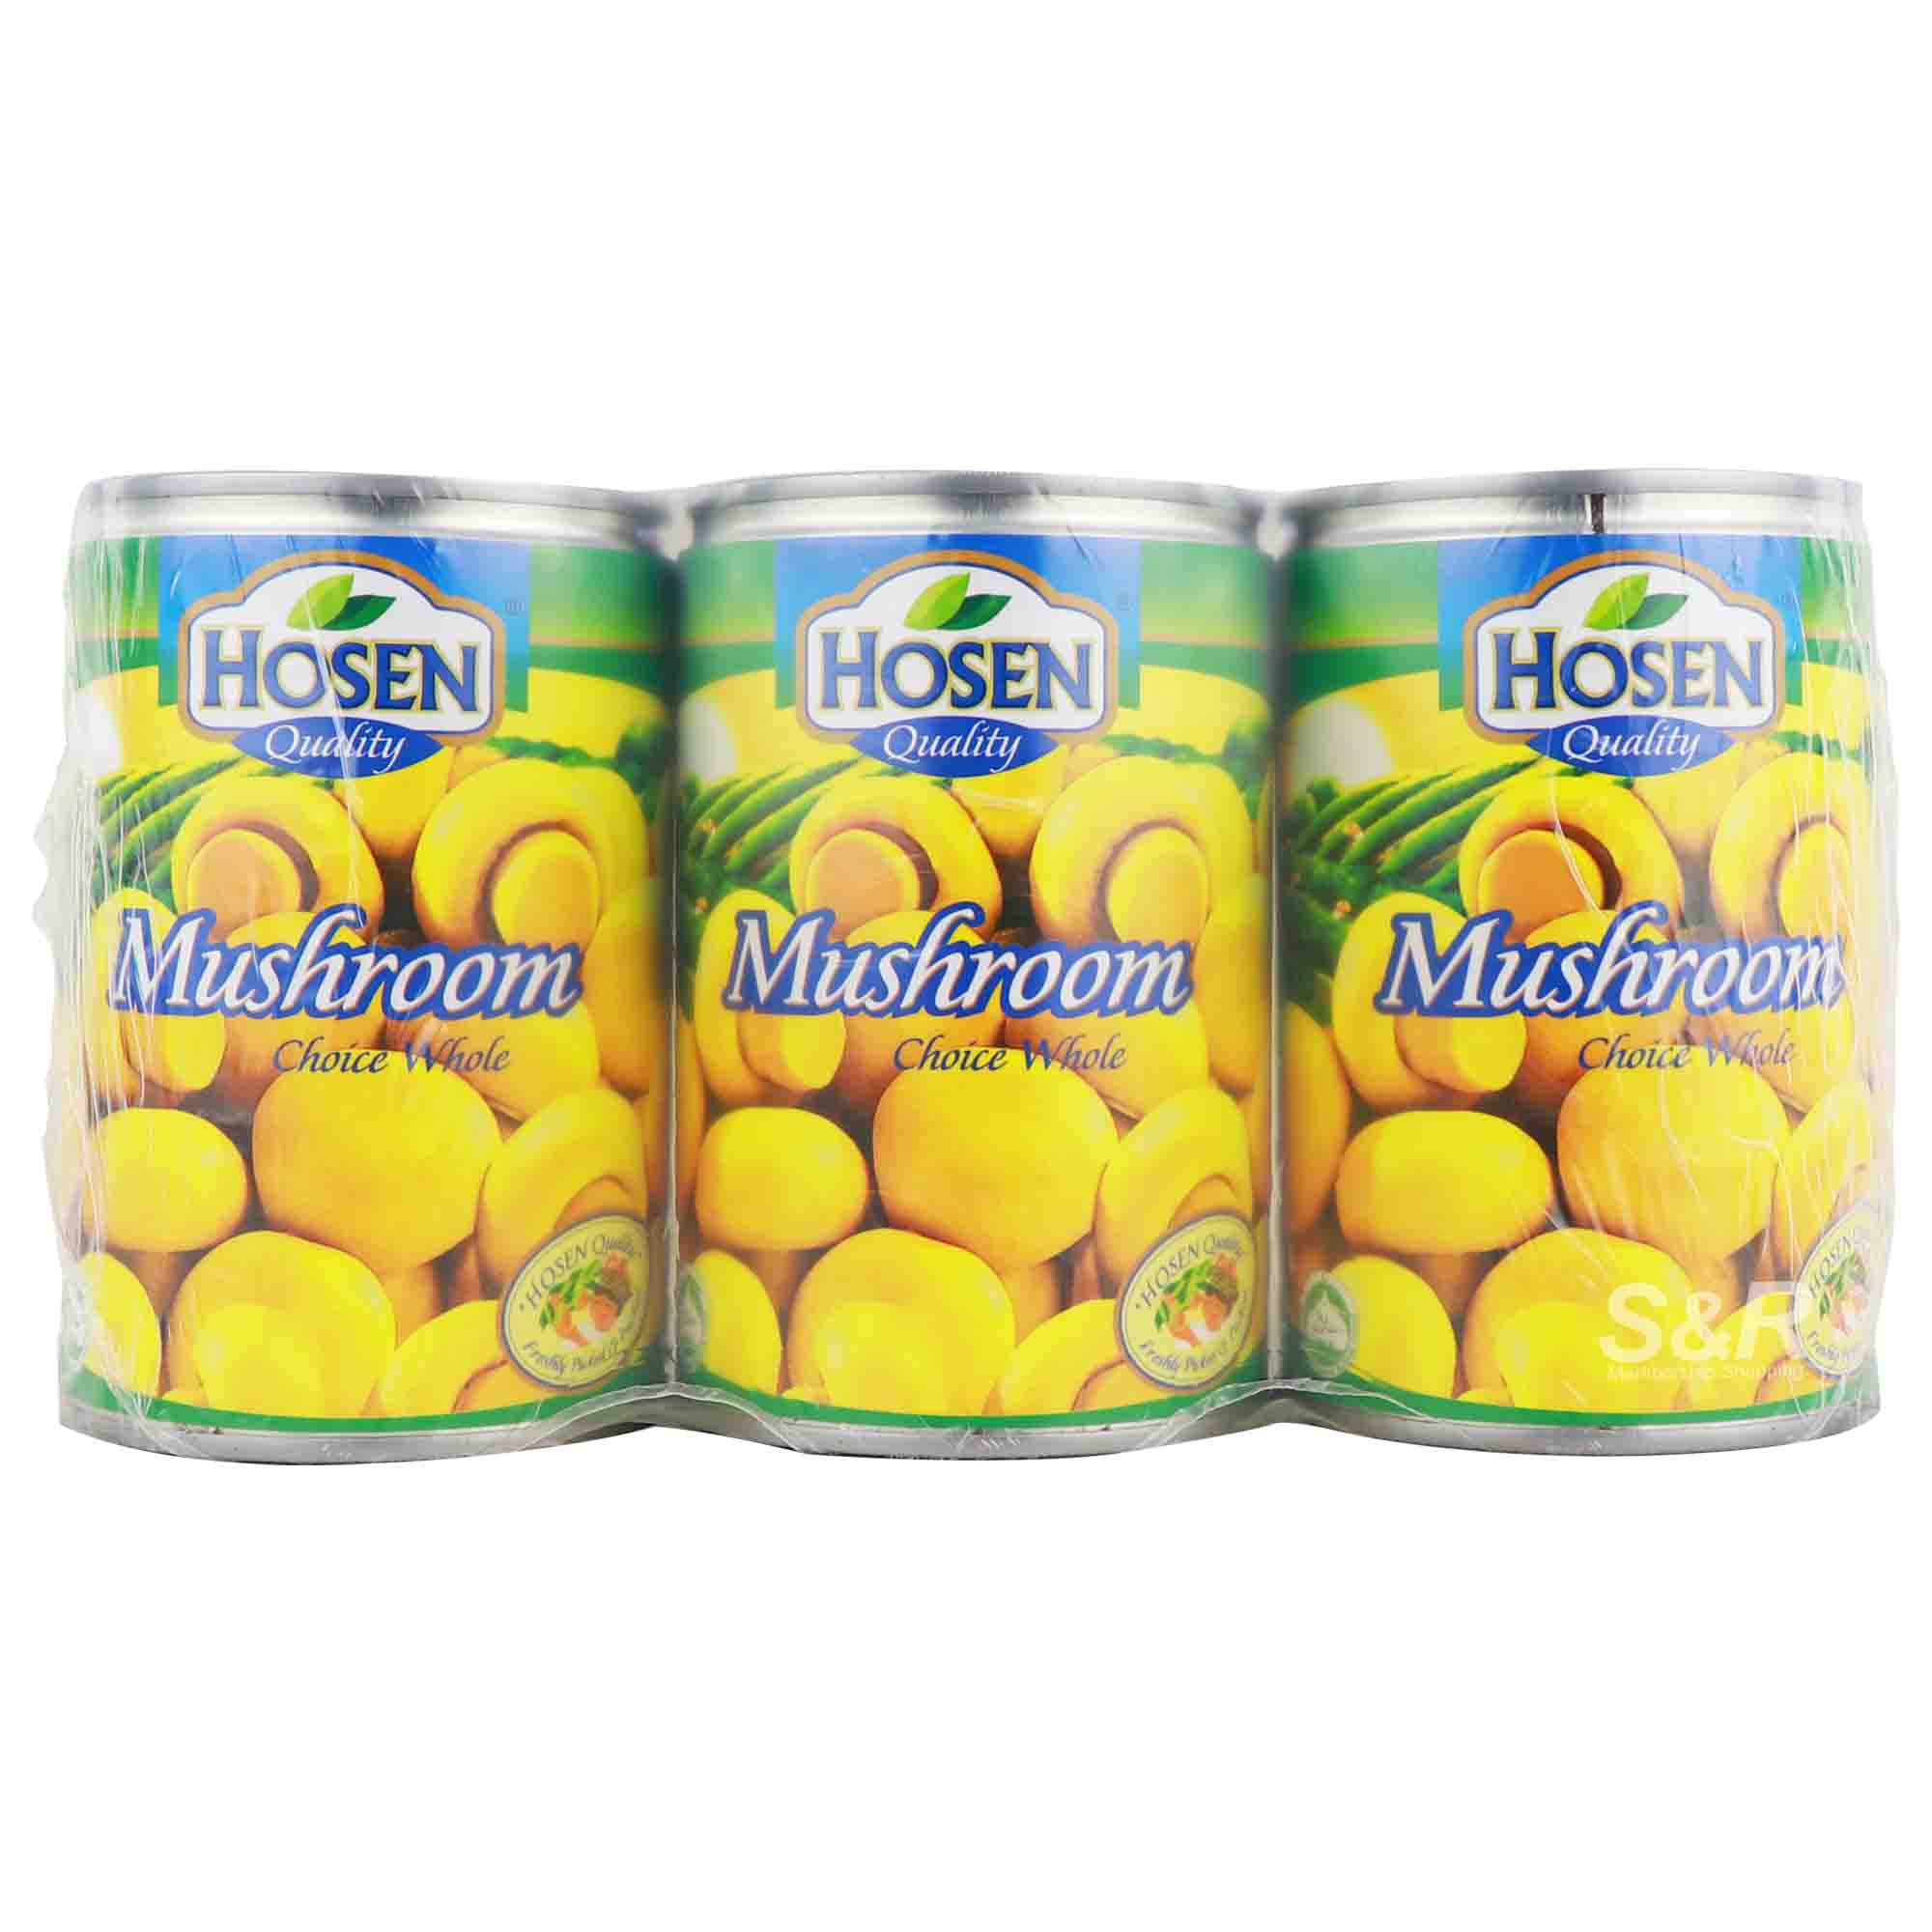 Hosen Quality Mushroom Choice Whole 3 cans